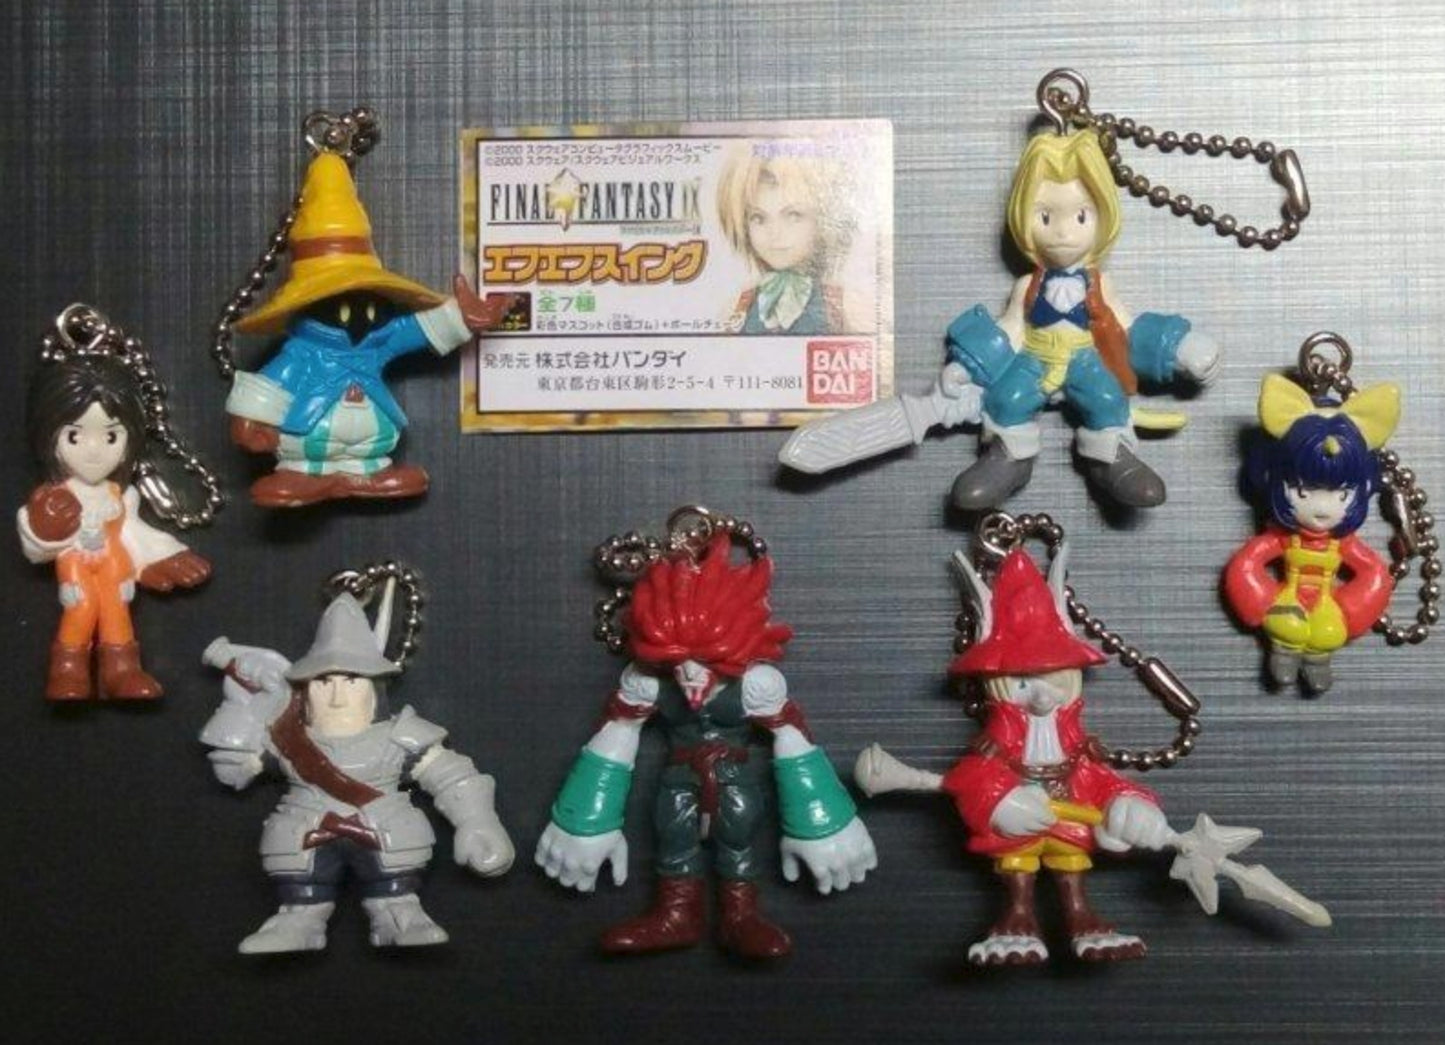 Bandai Final Fantasy IX 9 Gashapon Capsule Part 1 7 Mini Trading Collection Figure Set Used